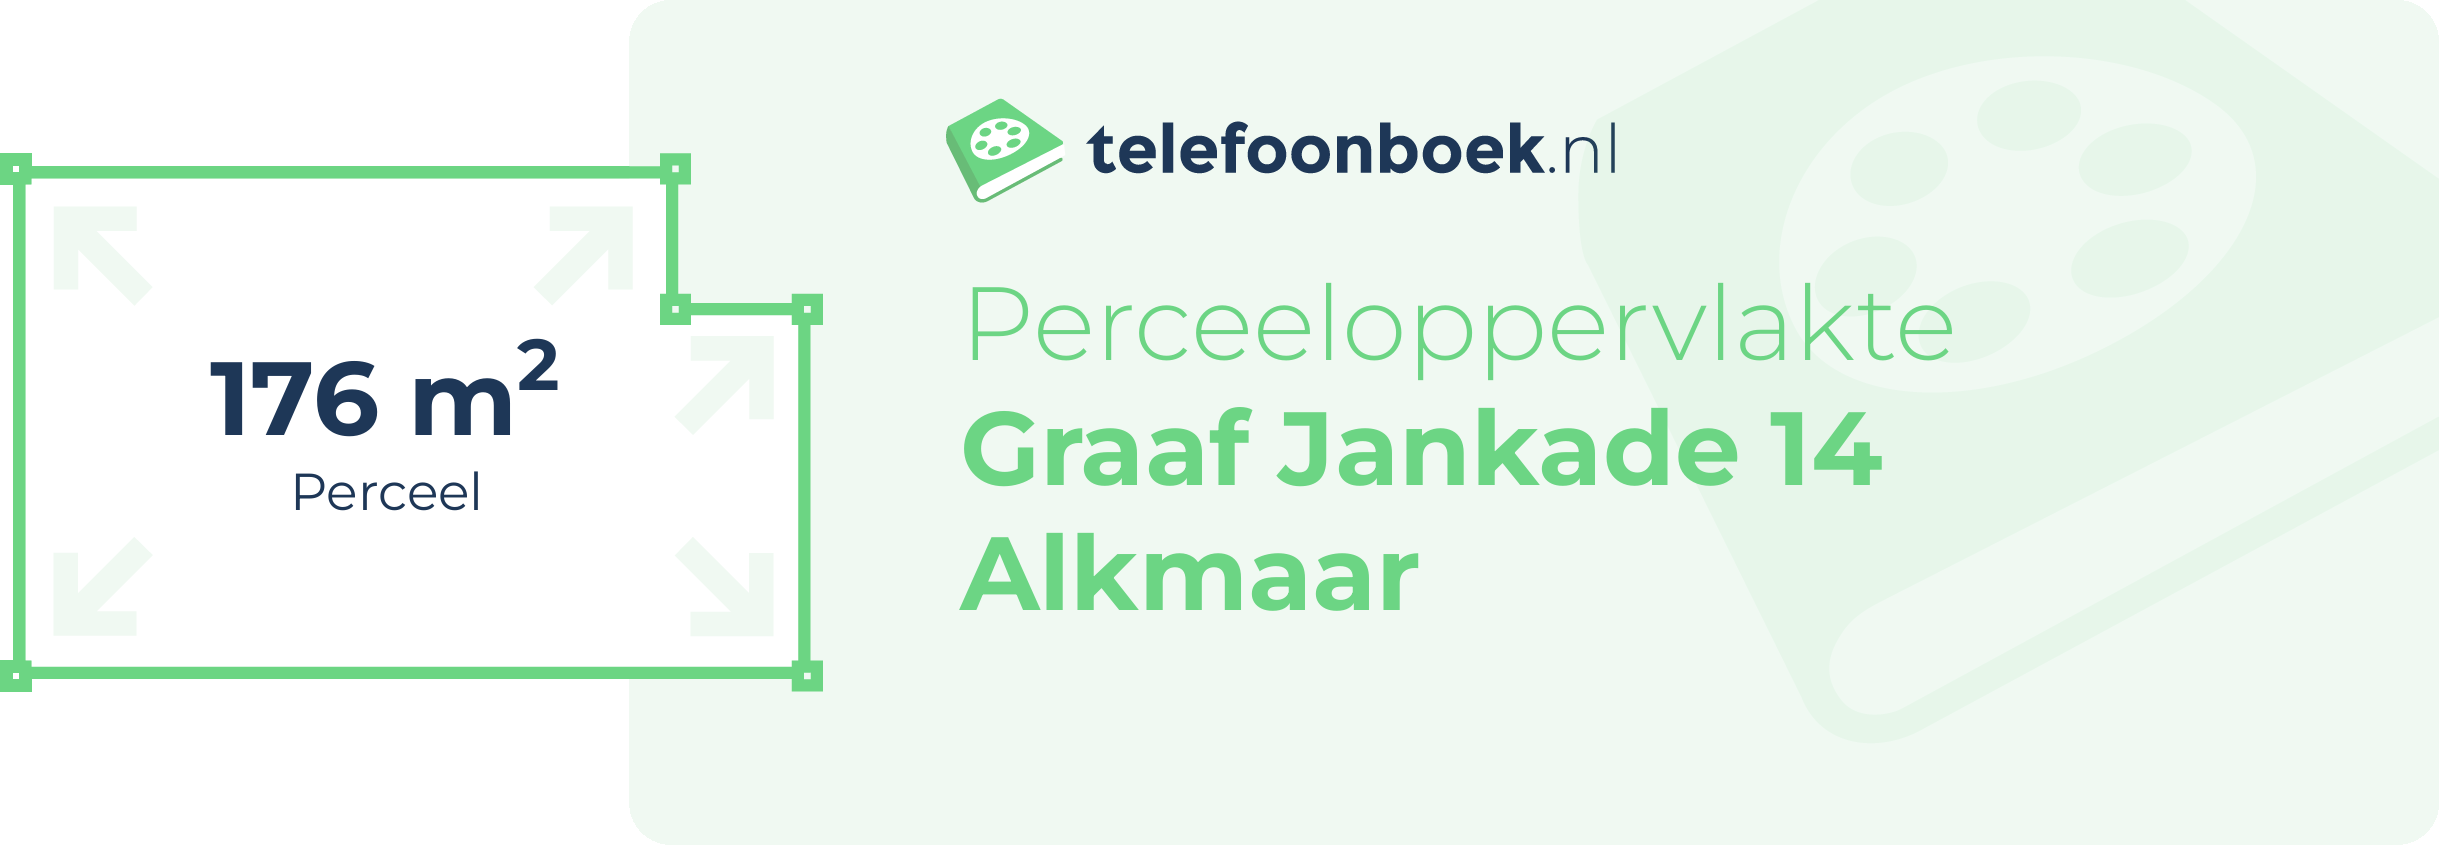 Perceeloppervlakte Graaf Jankade 14 Alkmaar